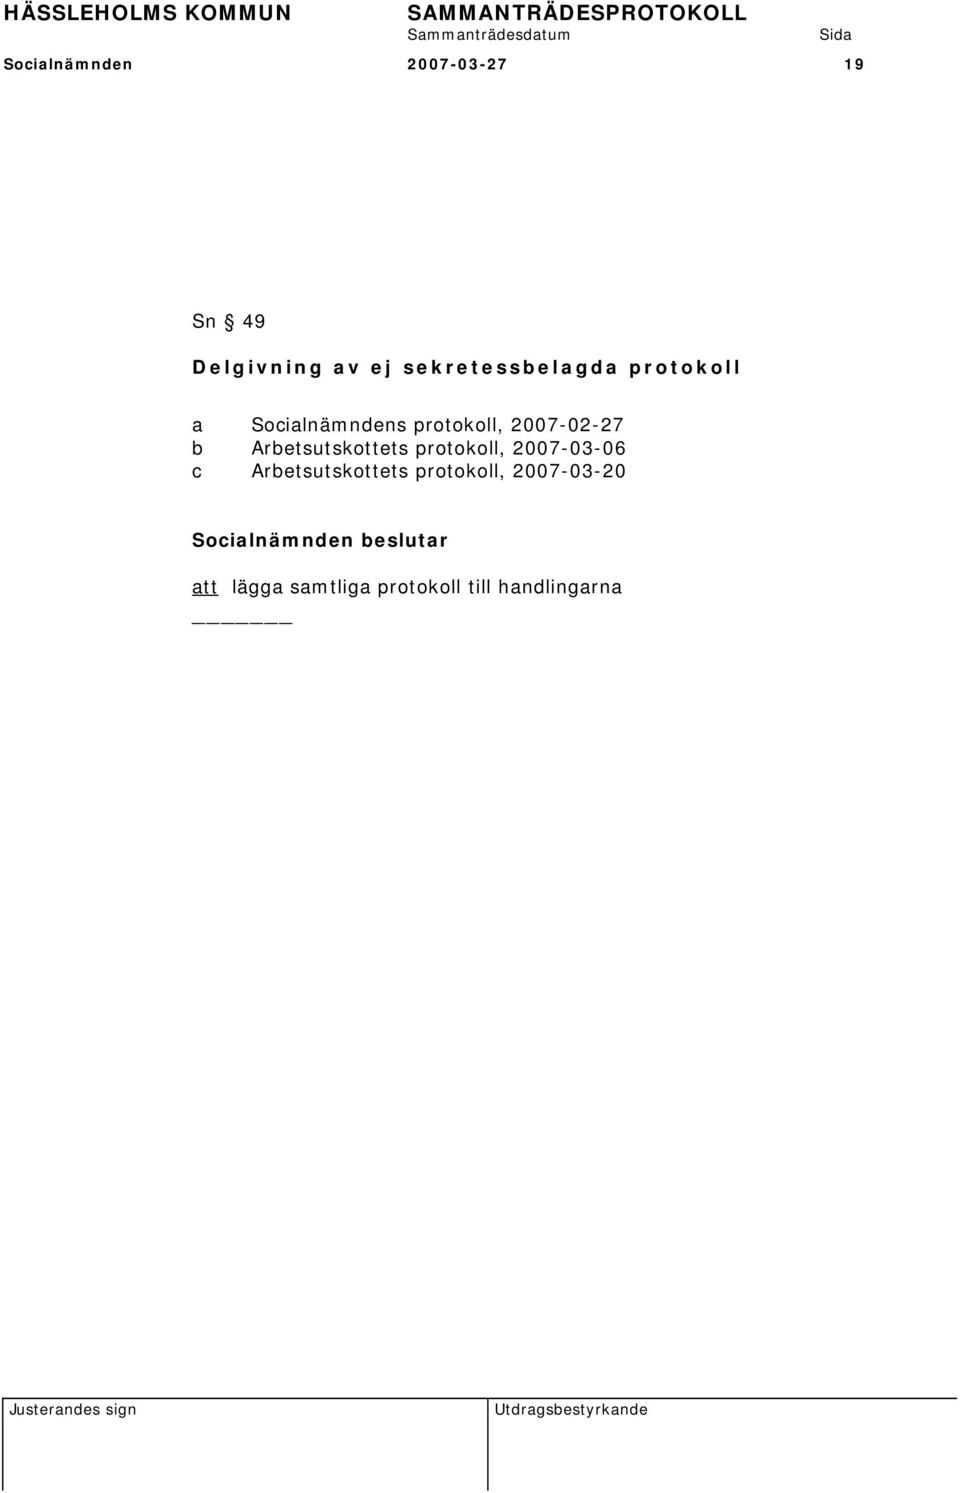 2007-02-27 b Arbetsutskottets protokoll, 2007-03-06 c